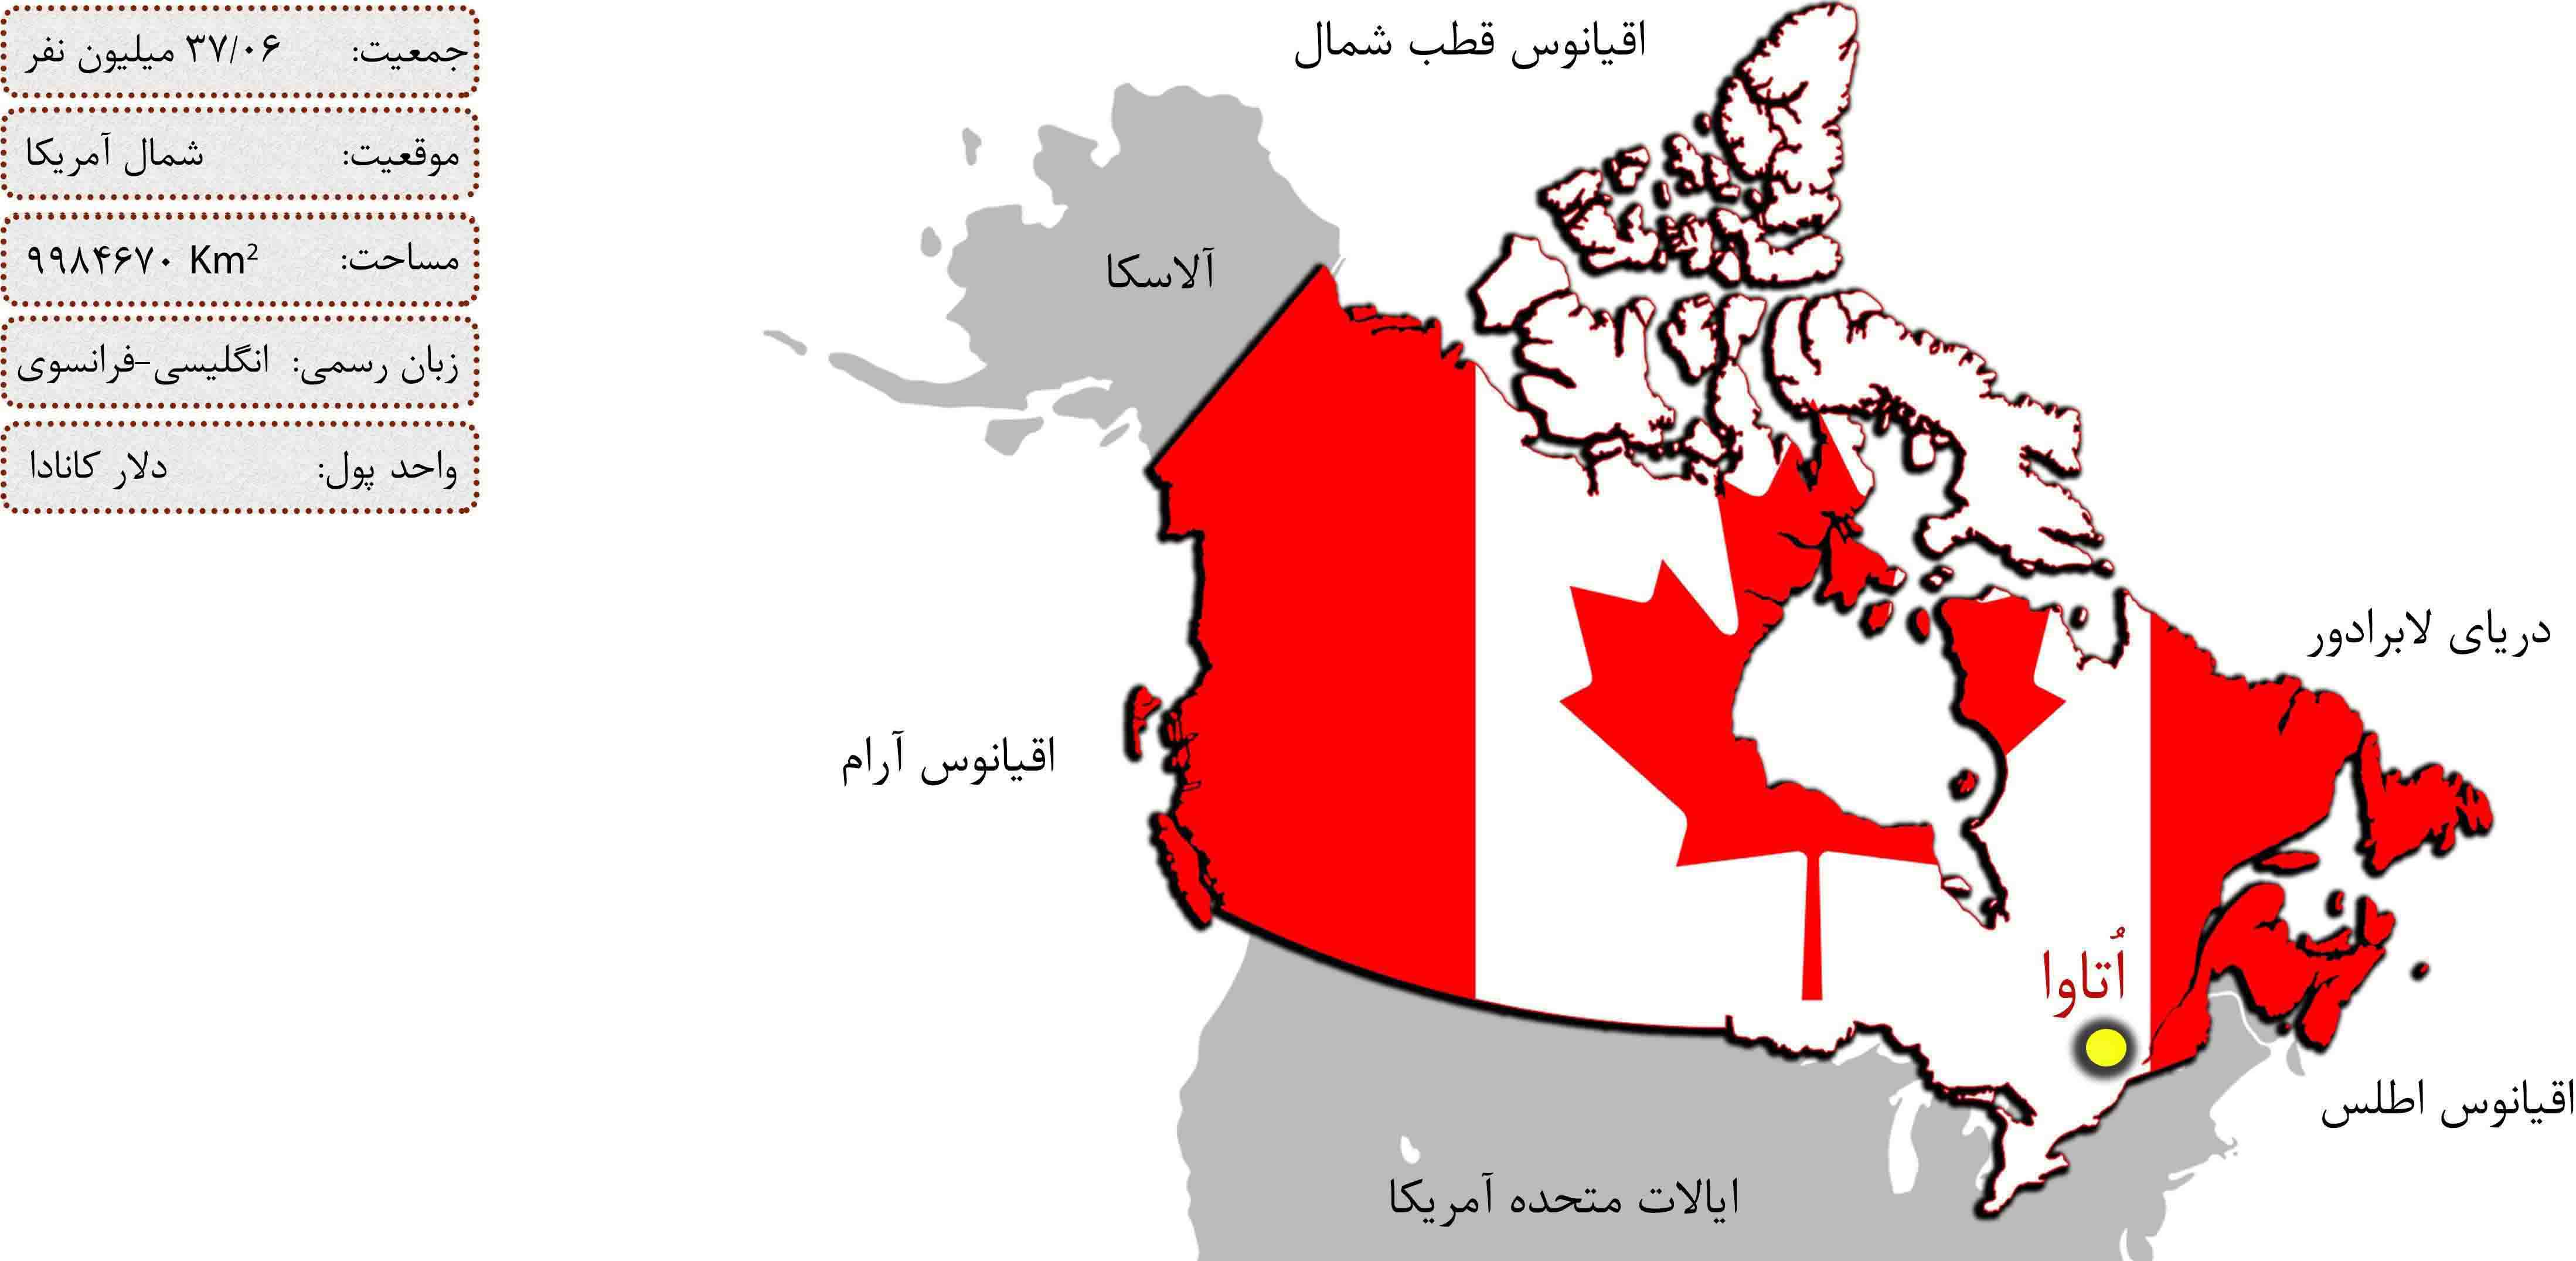 اعزام دانشجو به کانادا